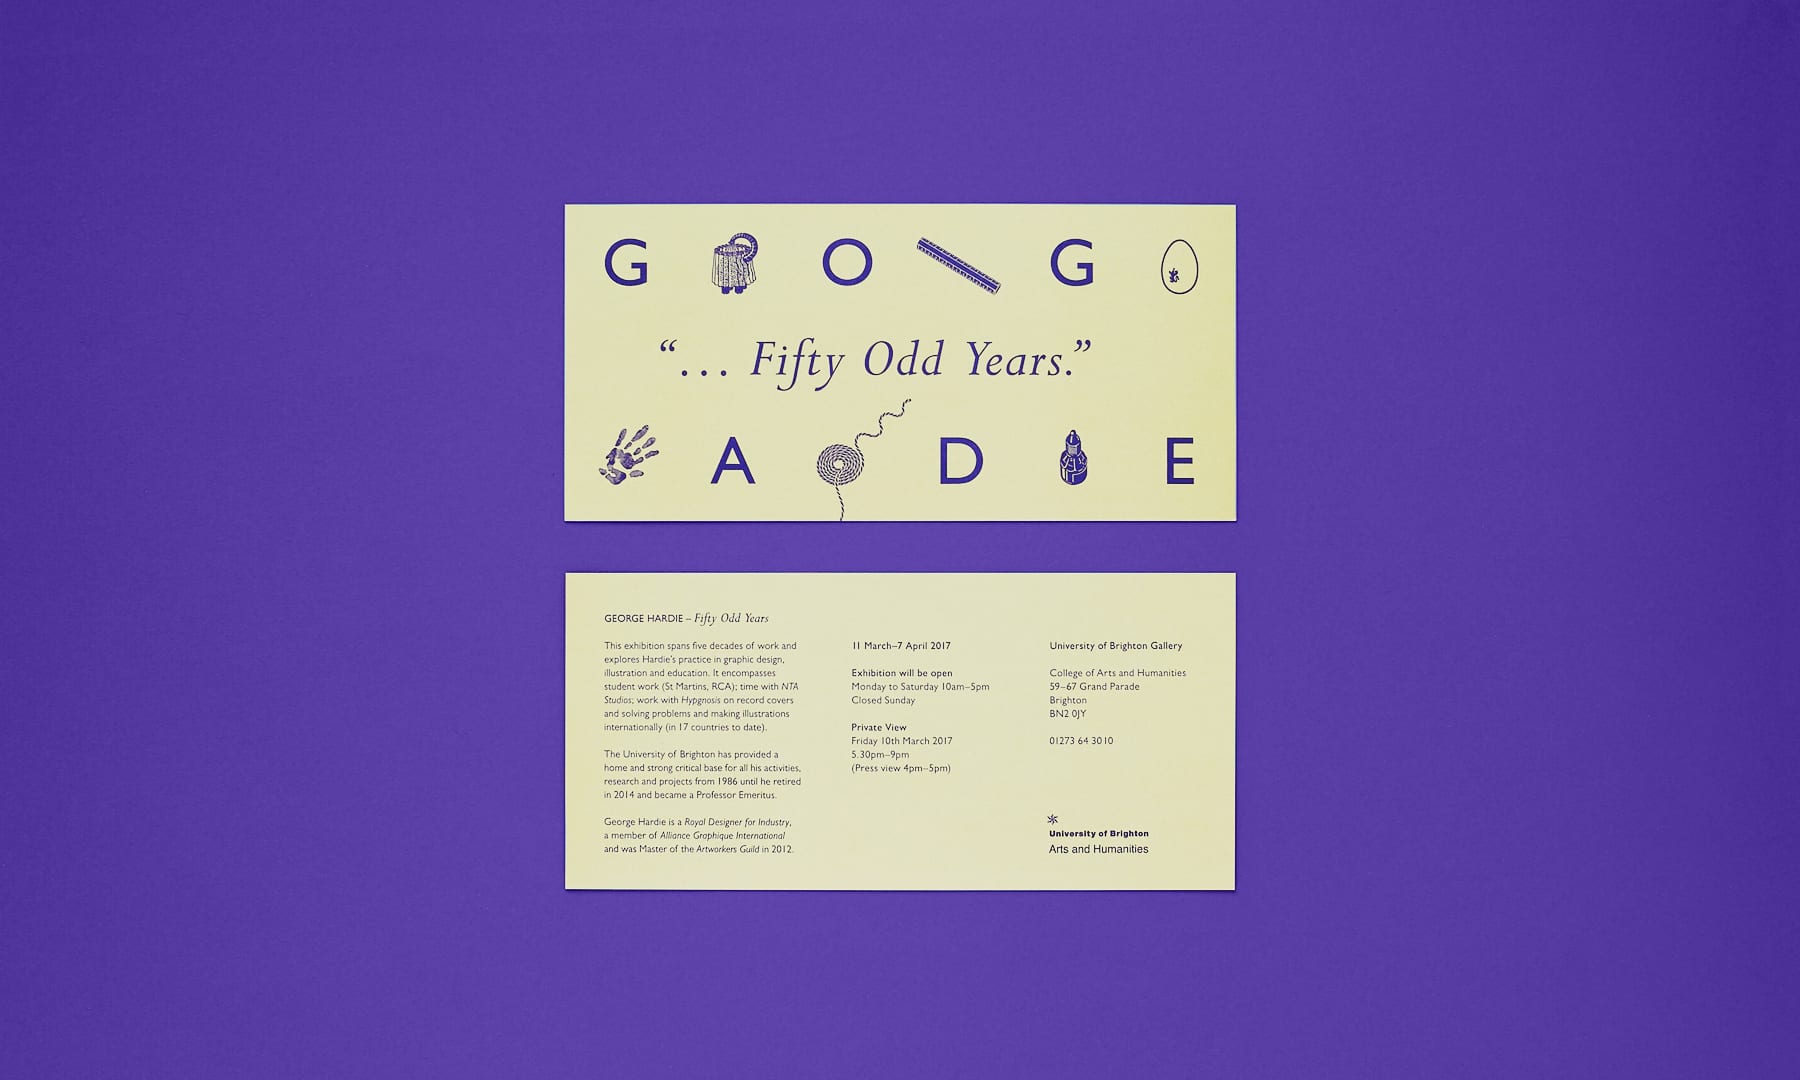 Fifty Odd Years - George Hardie - printed invitation 2